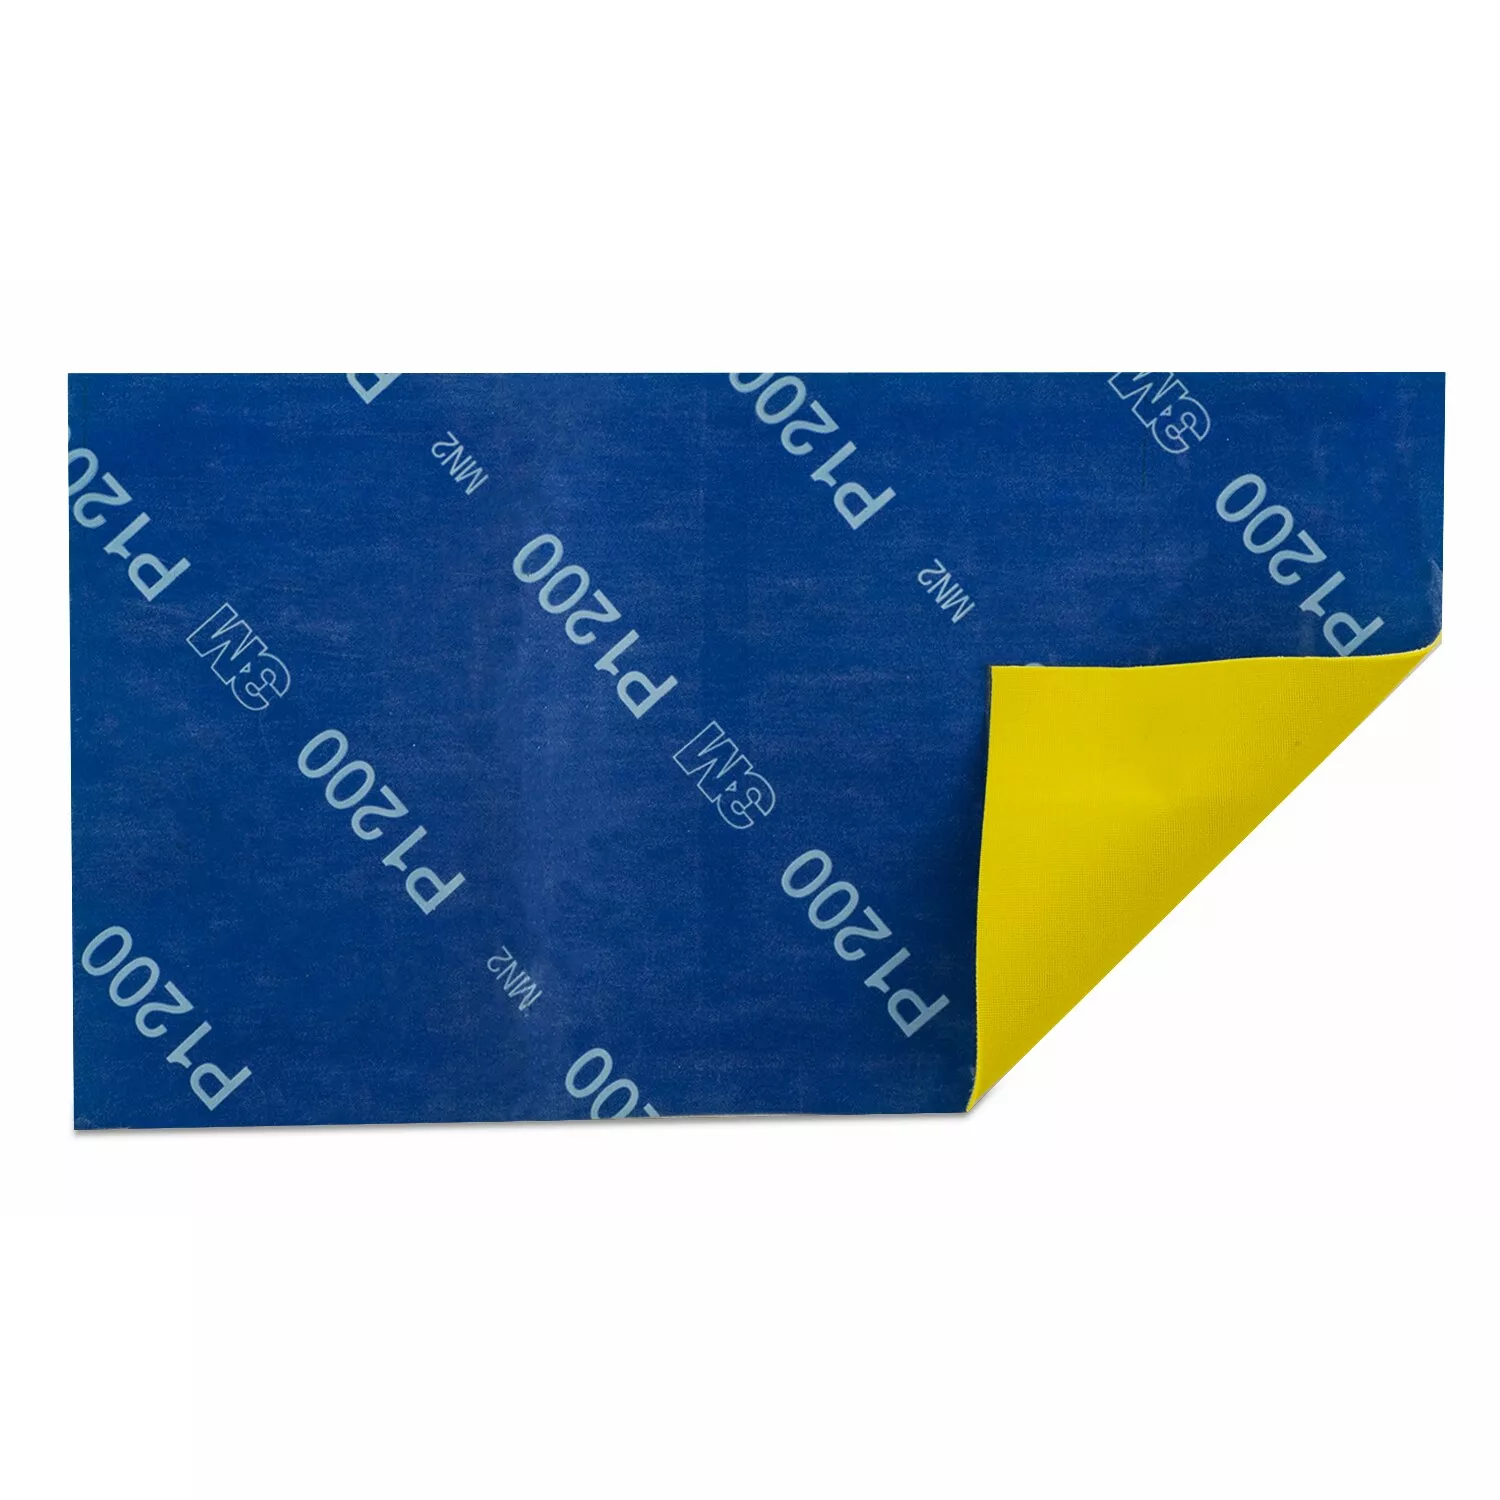 SKU 7100152960 | 3M™ Super Flexible Sanding Sheets